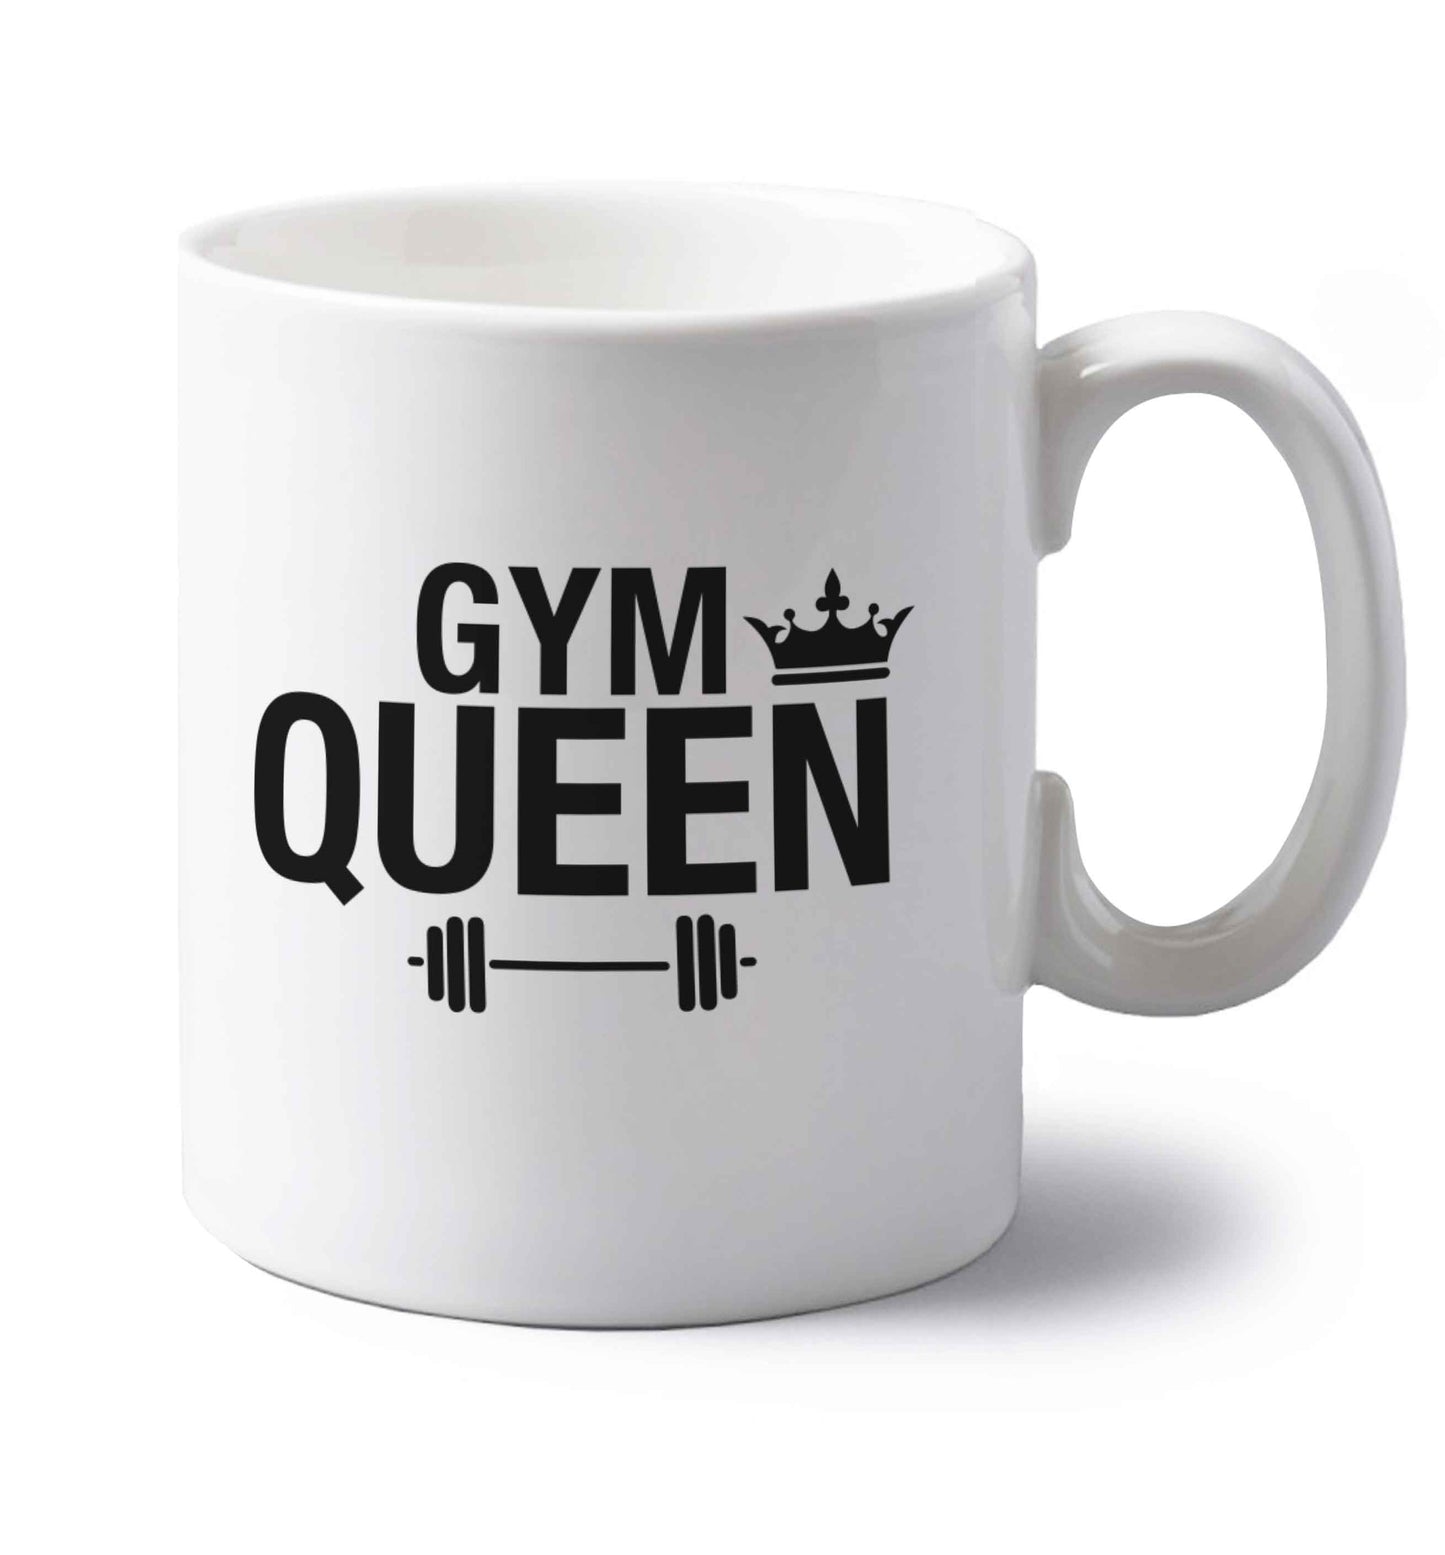 Gym queen left handed white ceramic mug 